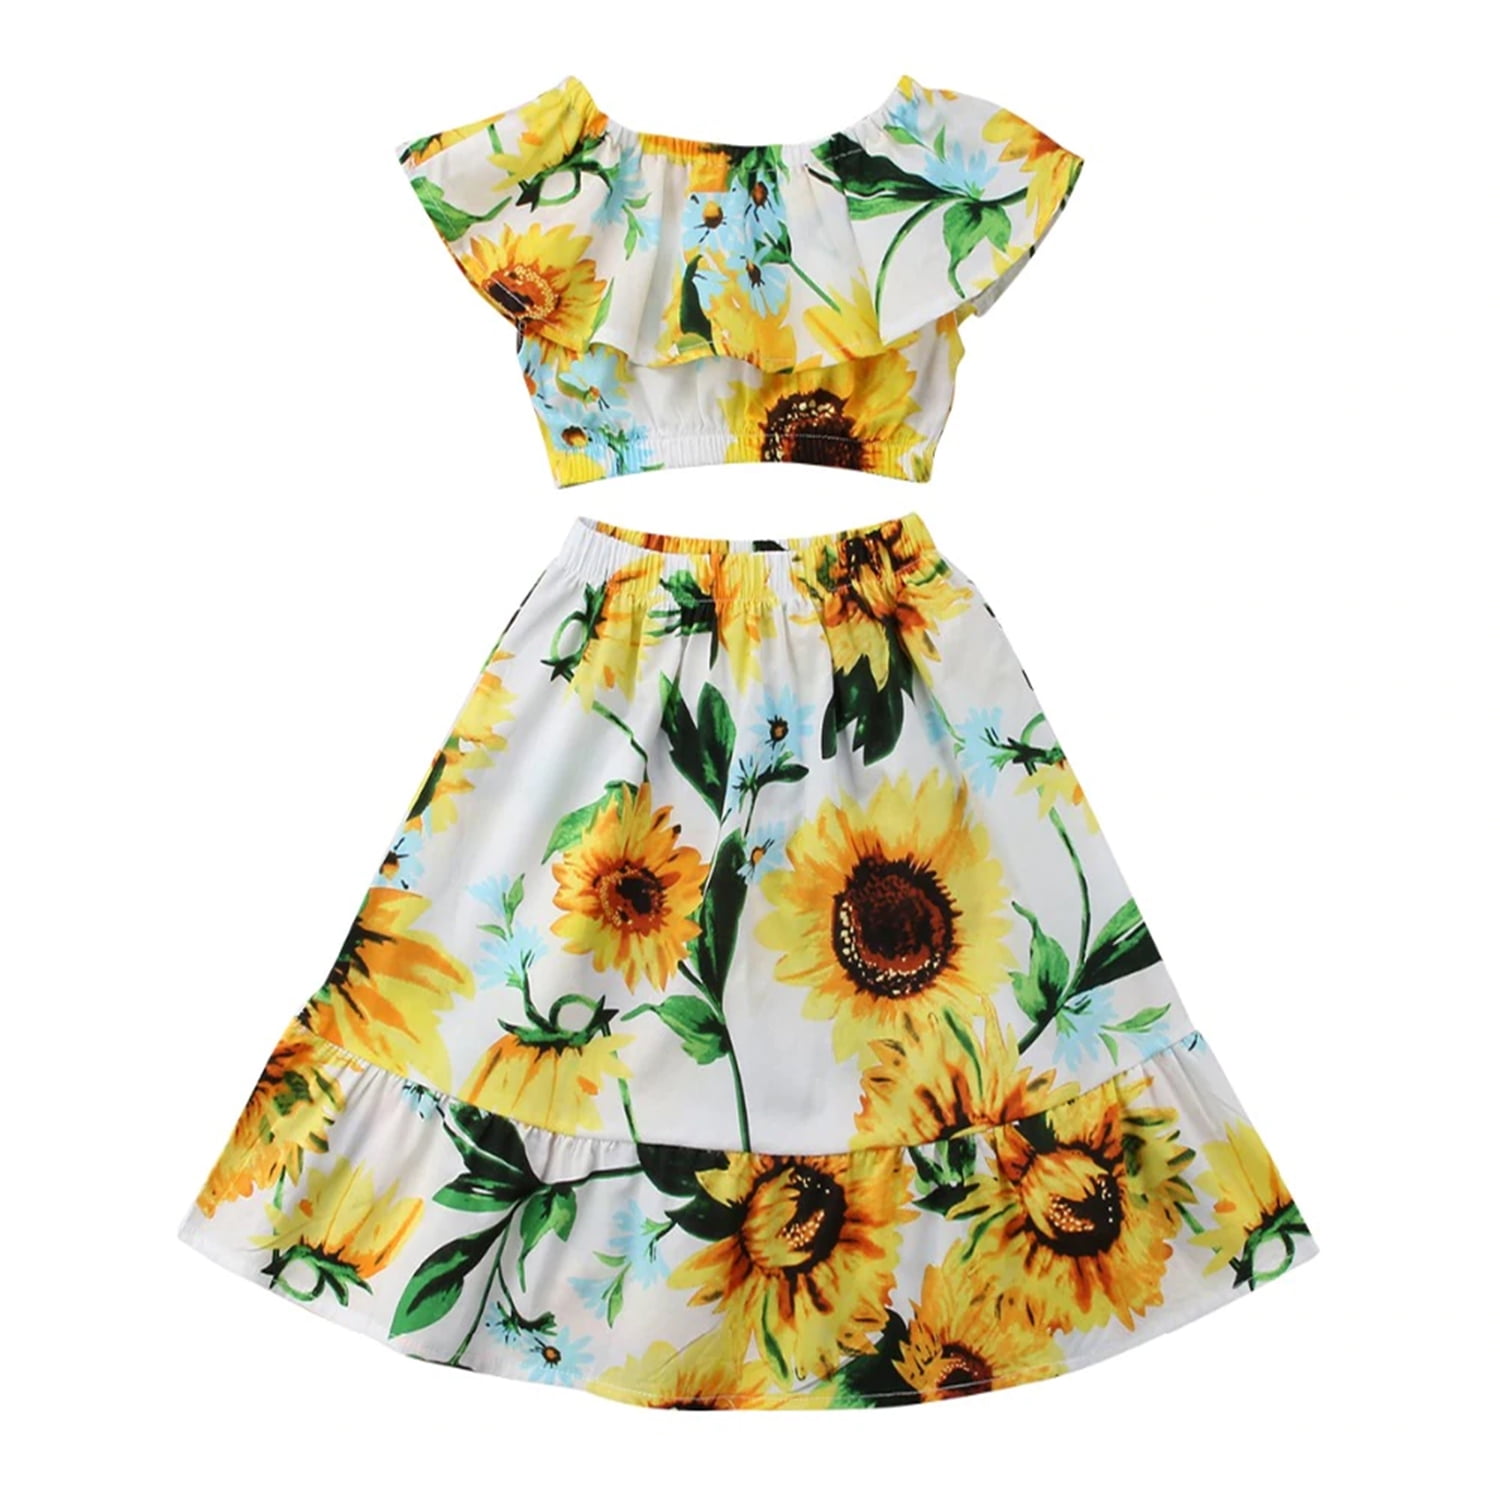 Girls Summer Clothes Princess off Shoulder Tops+Sunflower Bell Bottoms Outfits 